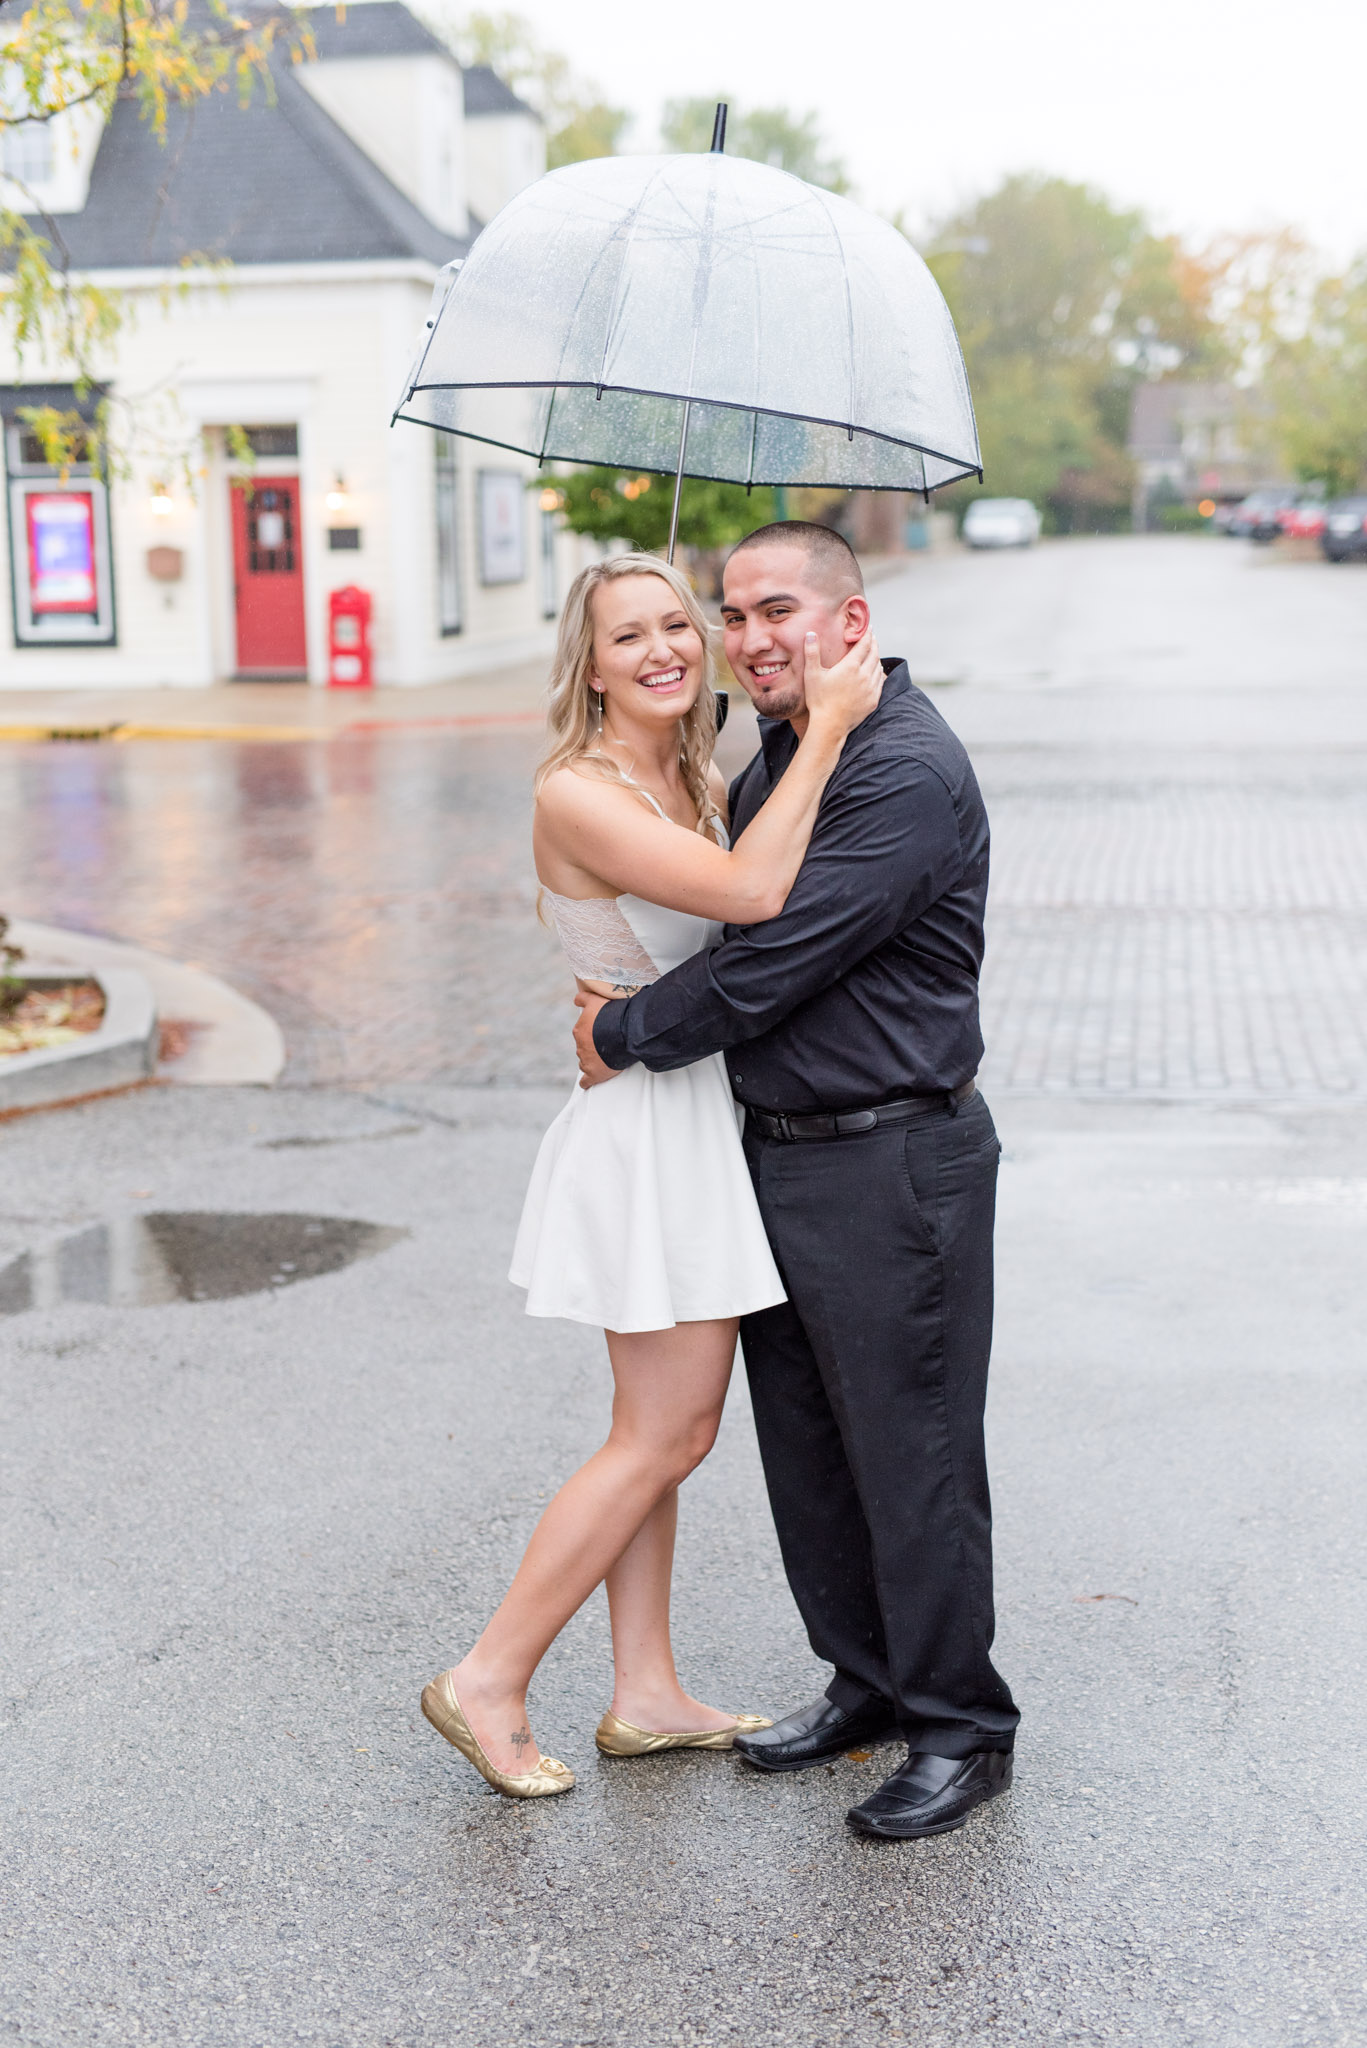 Bride and groom laugh under umbrella.